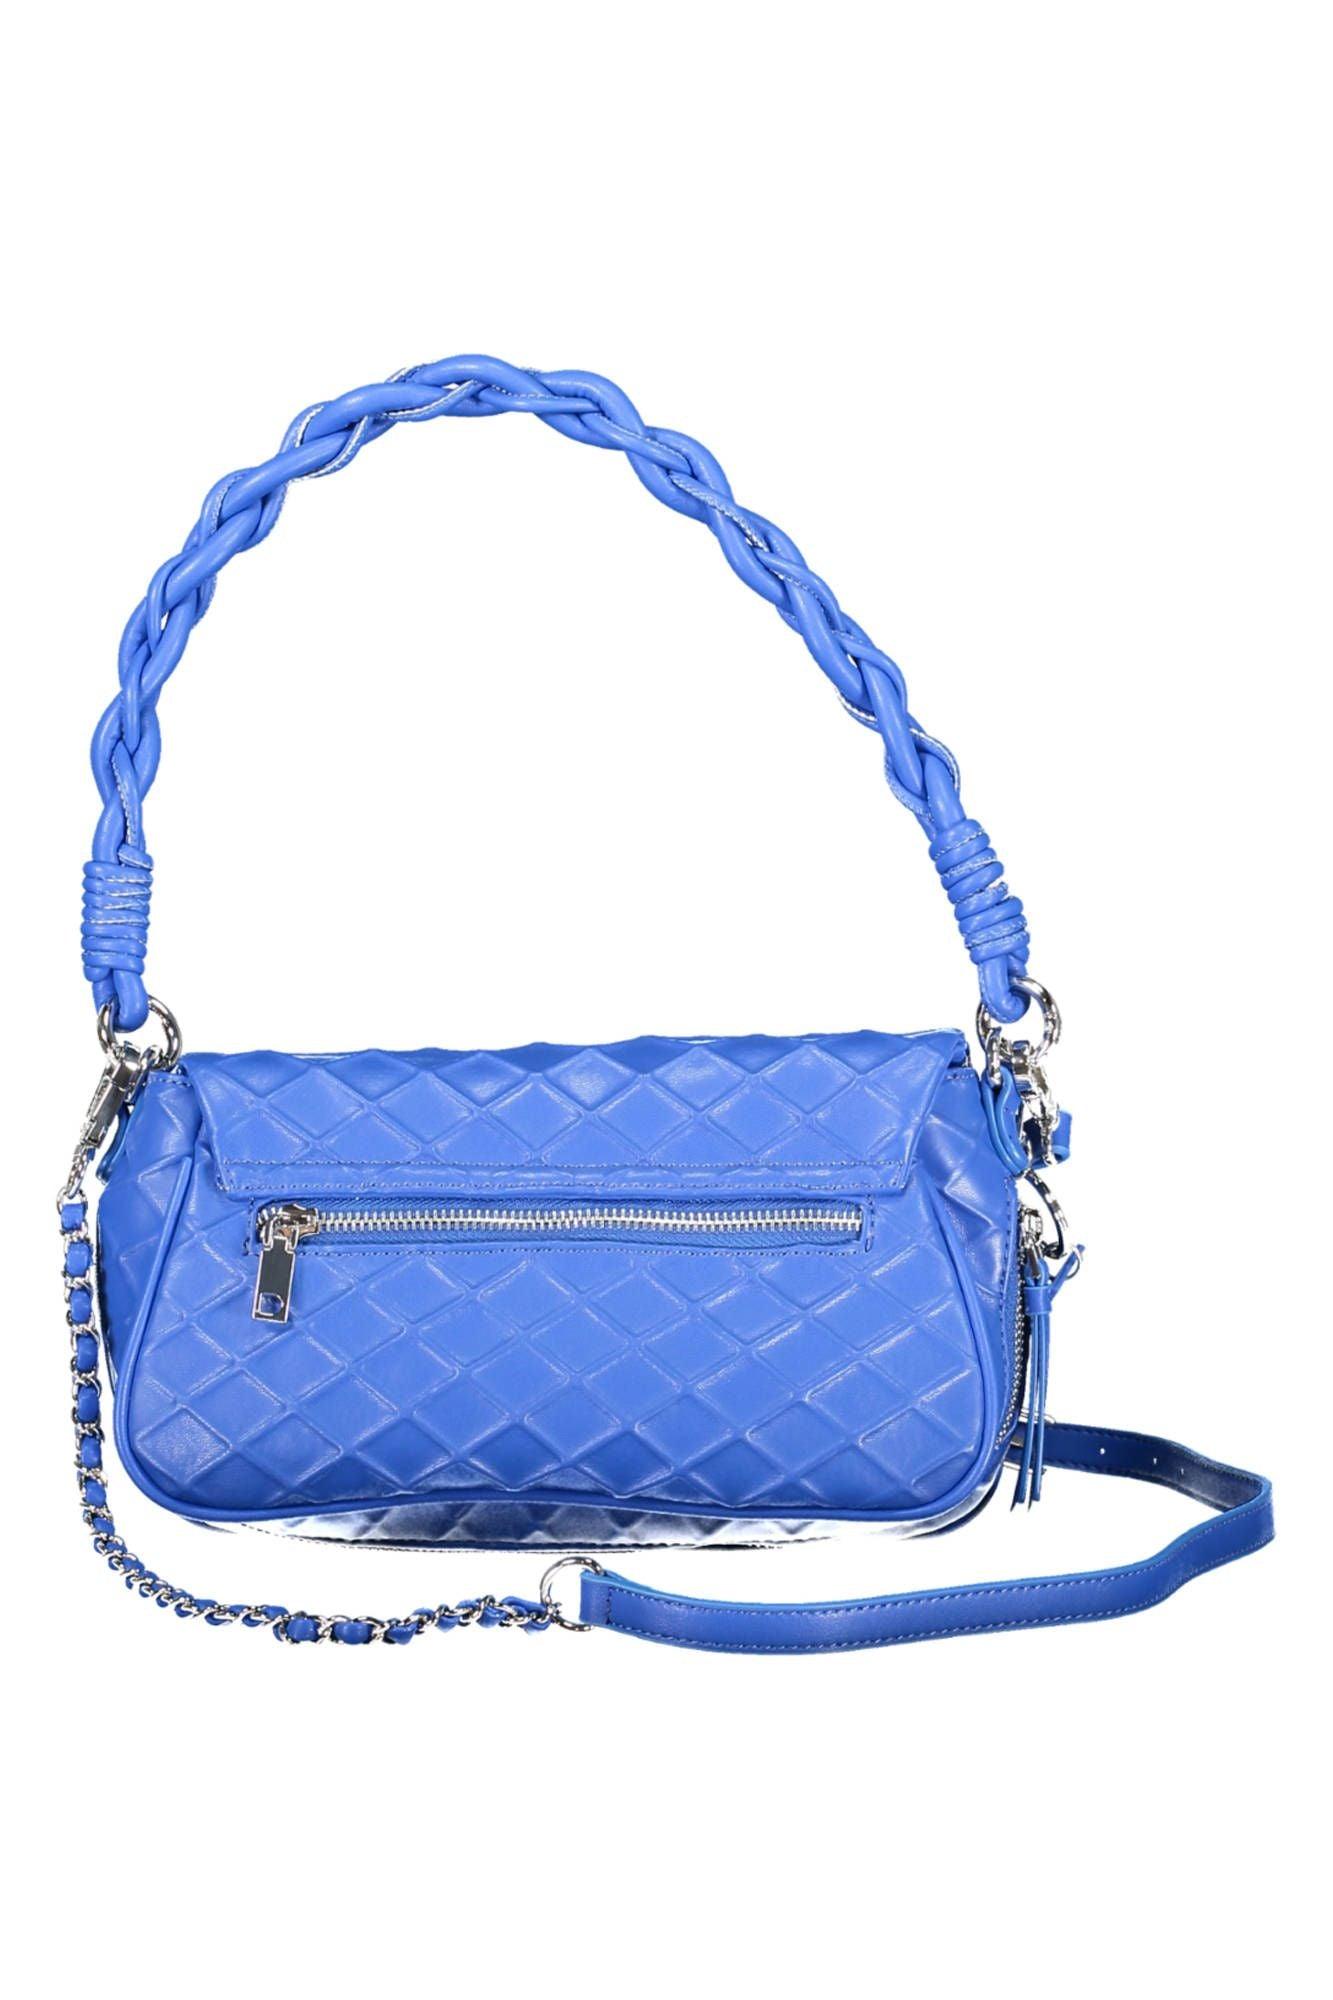 Desigual Chic Expandable Blue Handbag with Contrasting Details - PER.FASHION